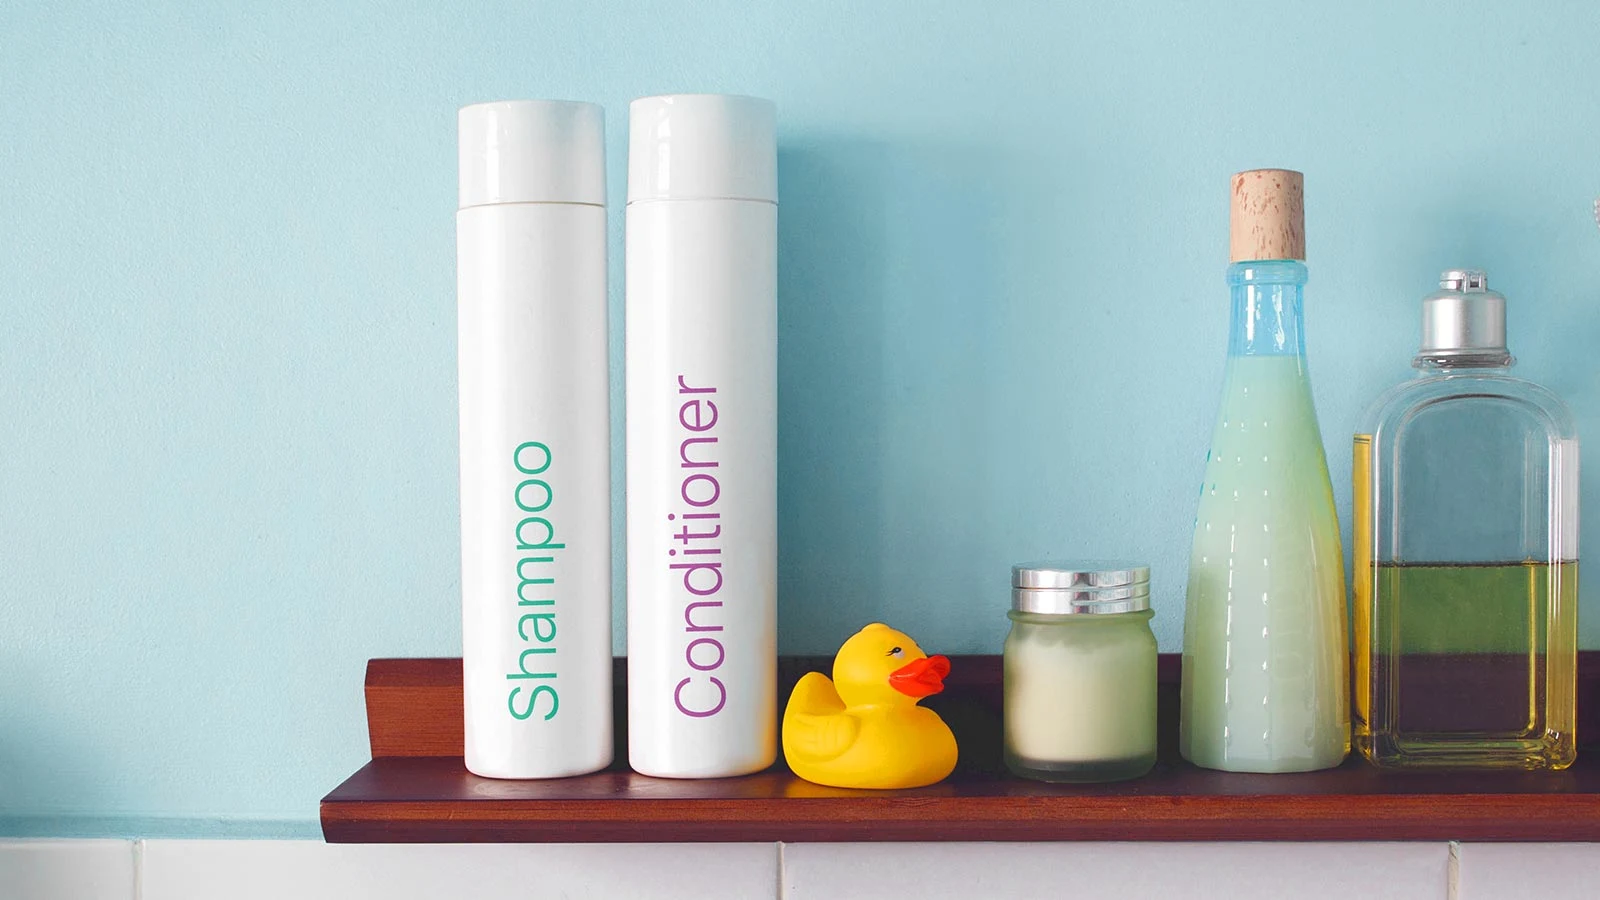 Shampoo and conditioner 